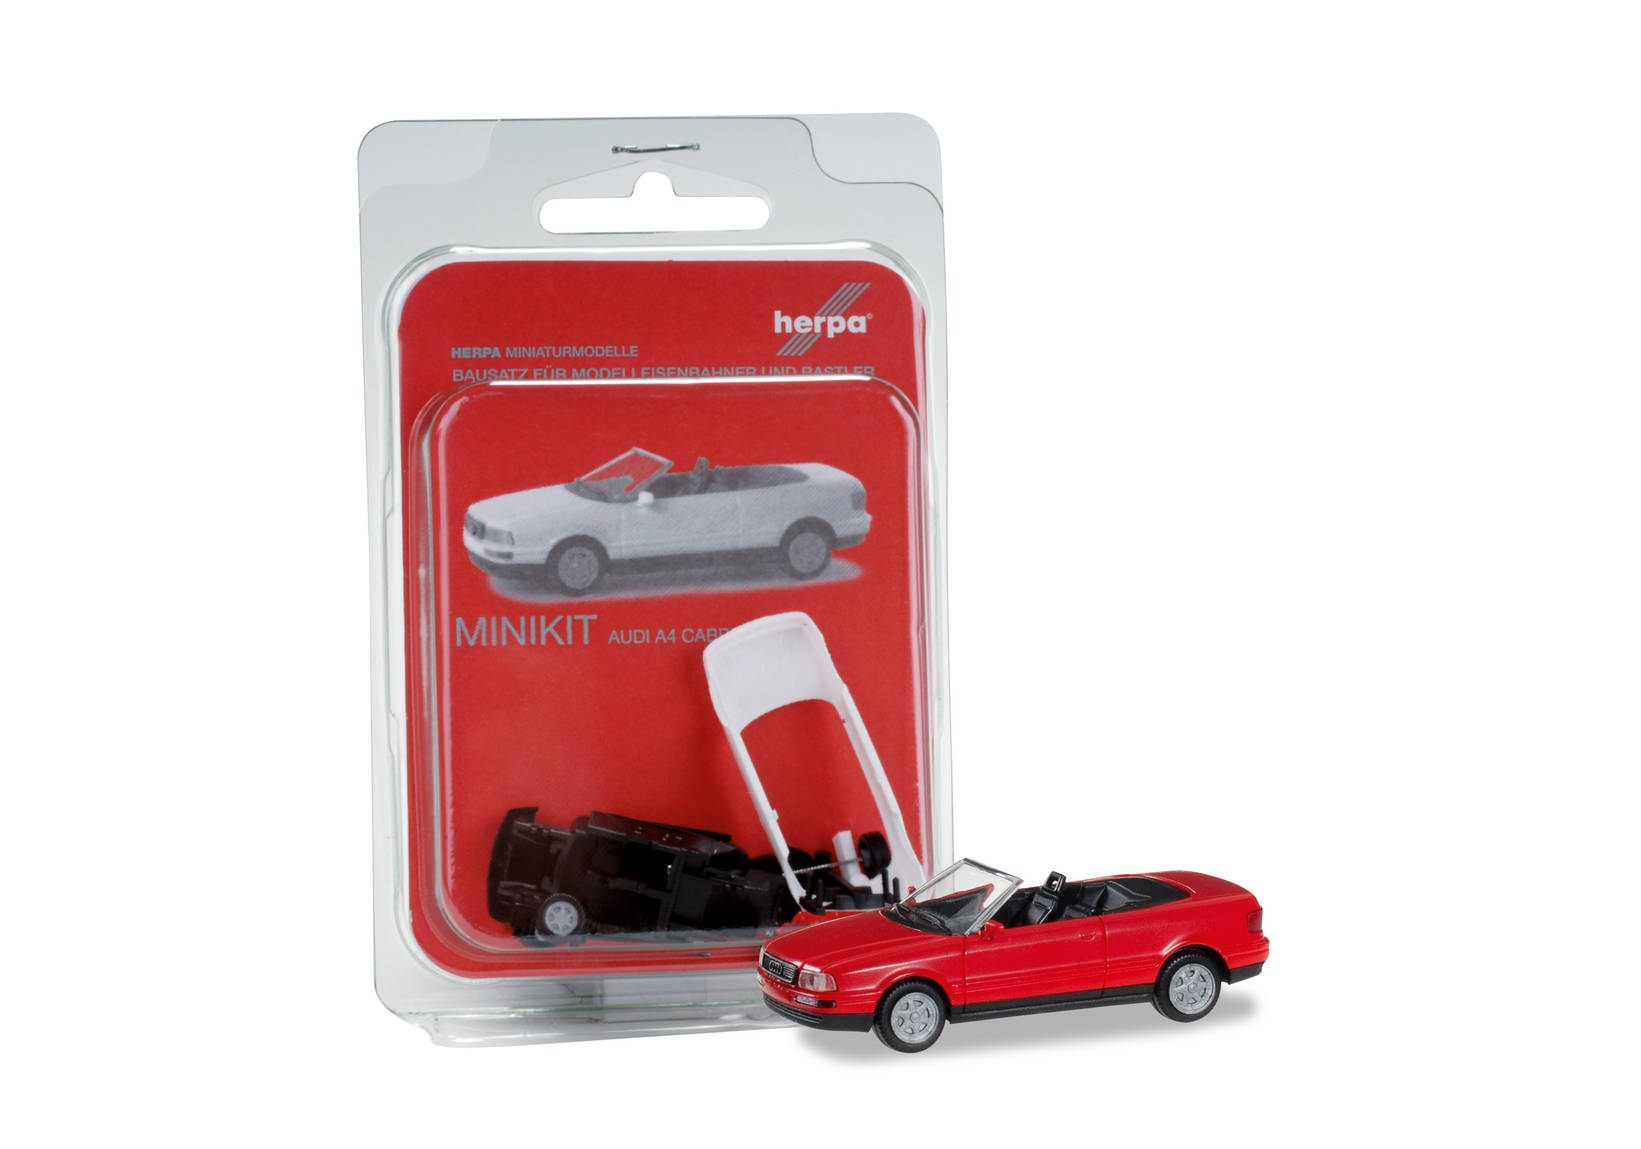 Herpa MiniKit: Audi 80 convertible, red